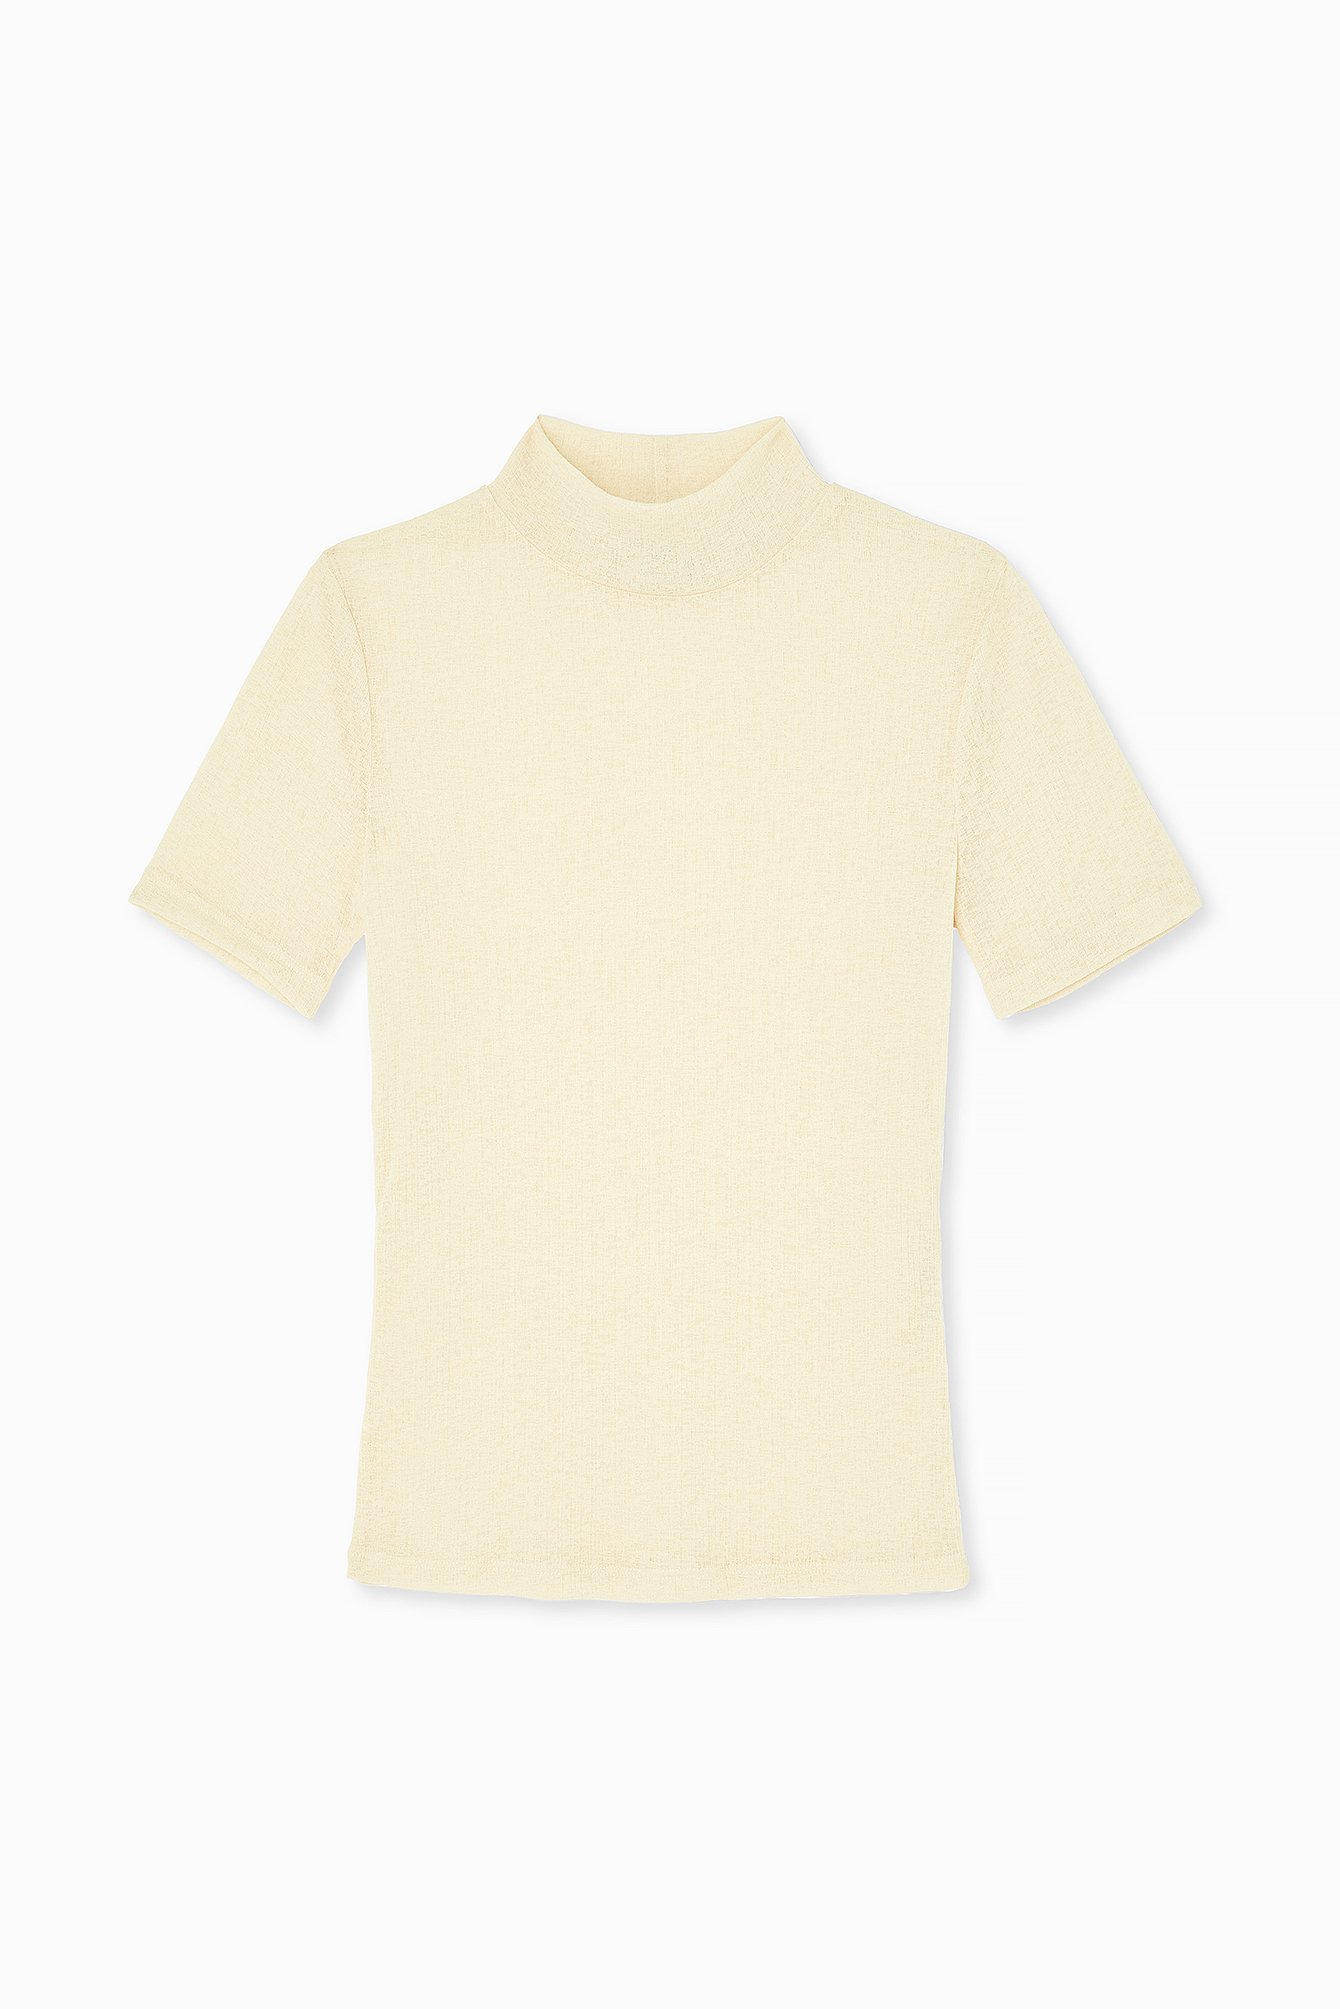 Yellow Sheer Short Sleeve Top